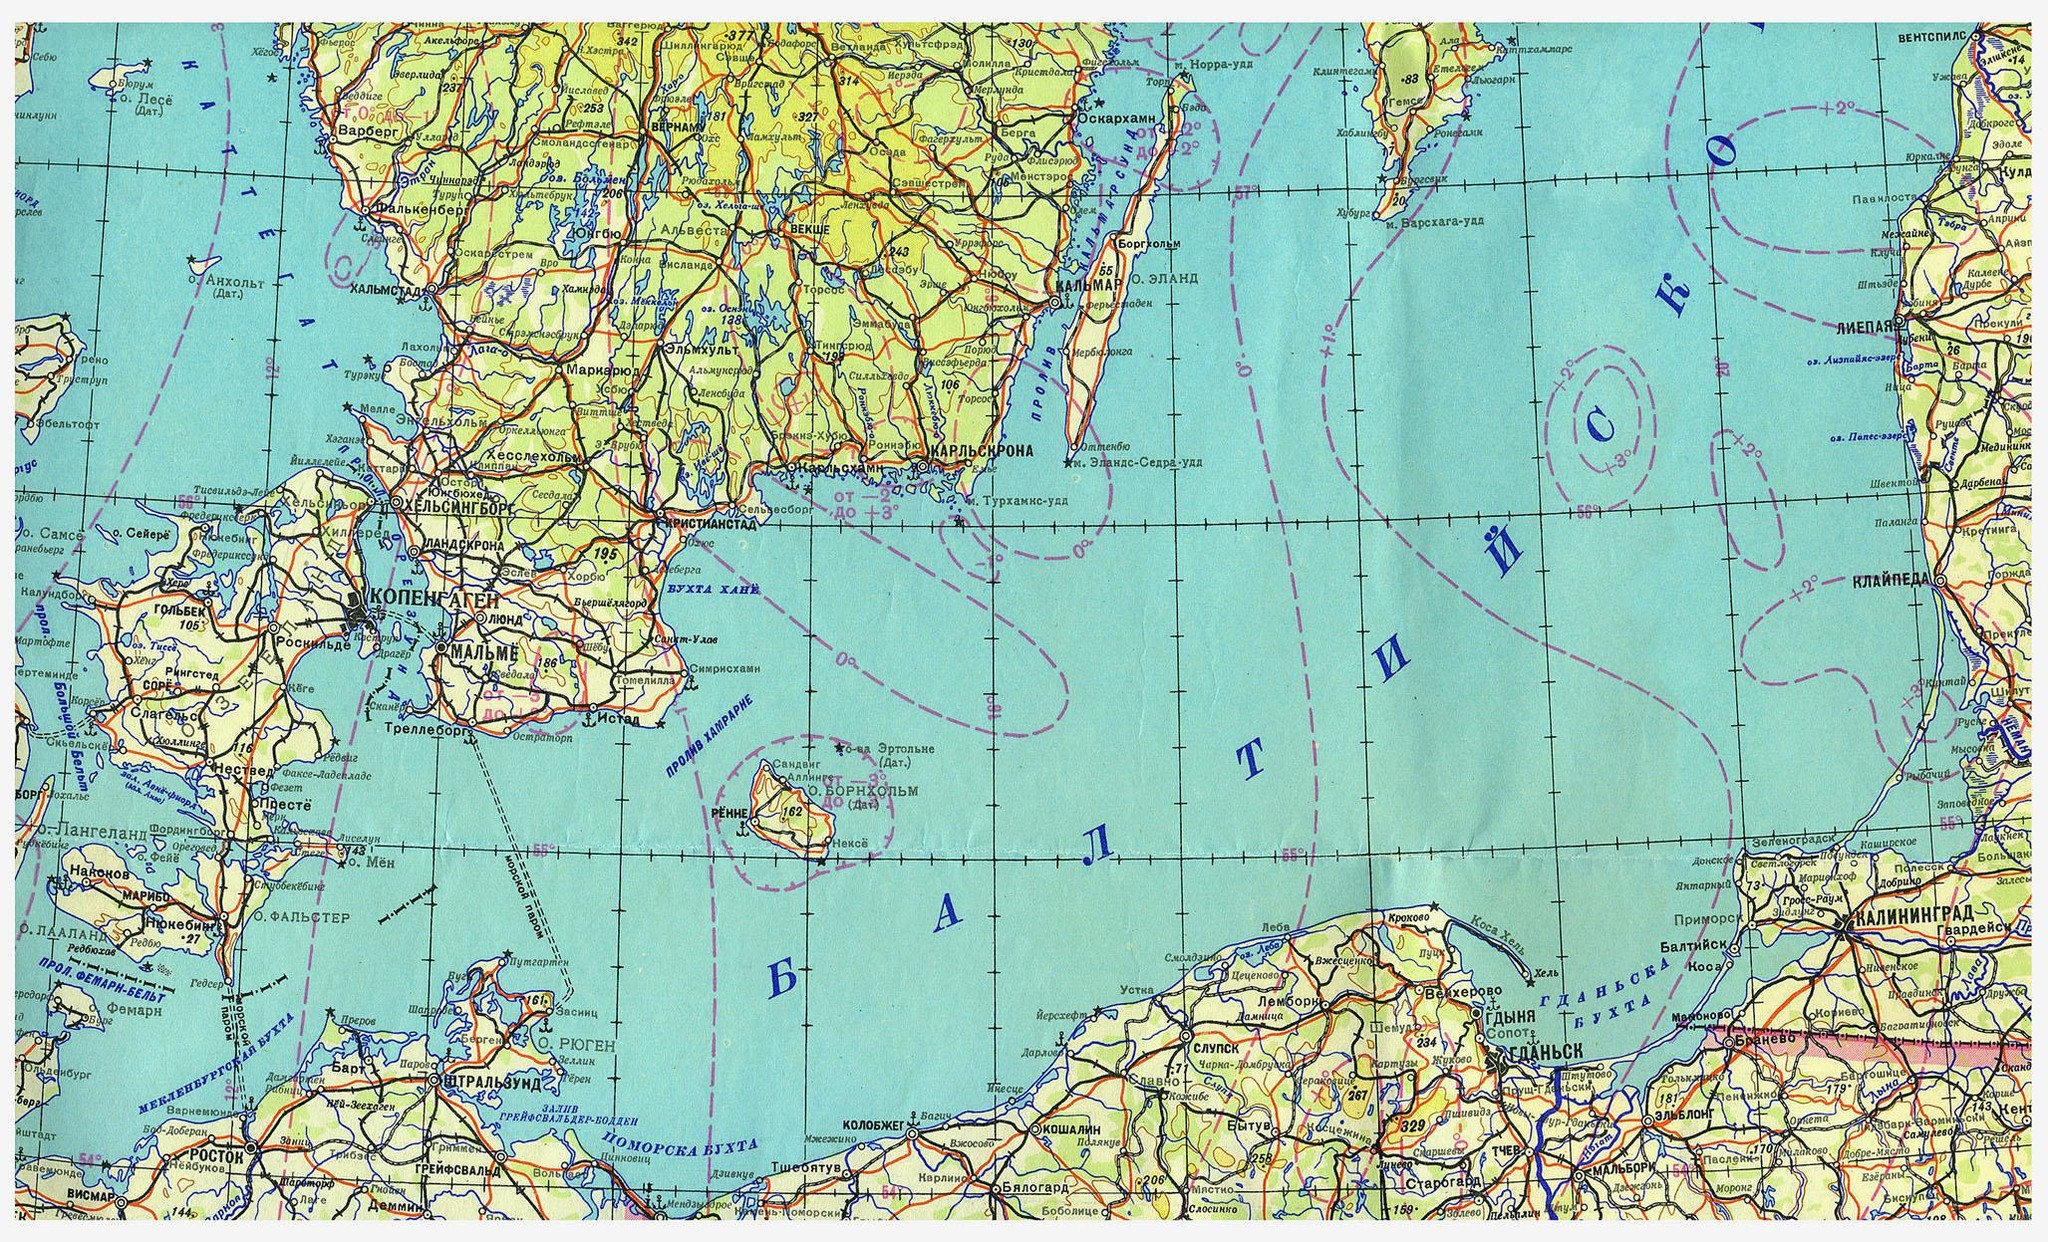 Географическая карта балтийского моря. Карта Балтийского моря подробная. Карта финского залива и Балтийского моря. Проливы Балтийского моря на карте. Акватория Балтийского моря на карте.